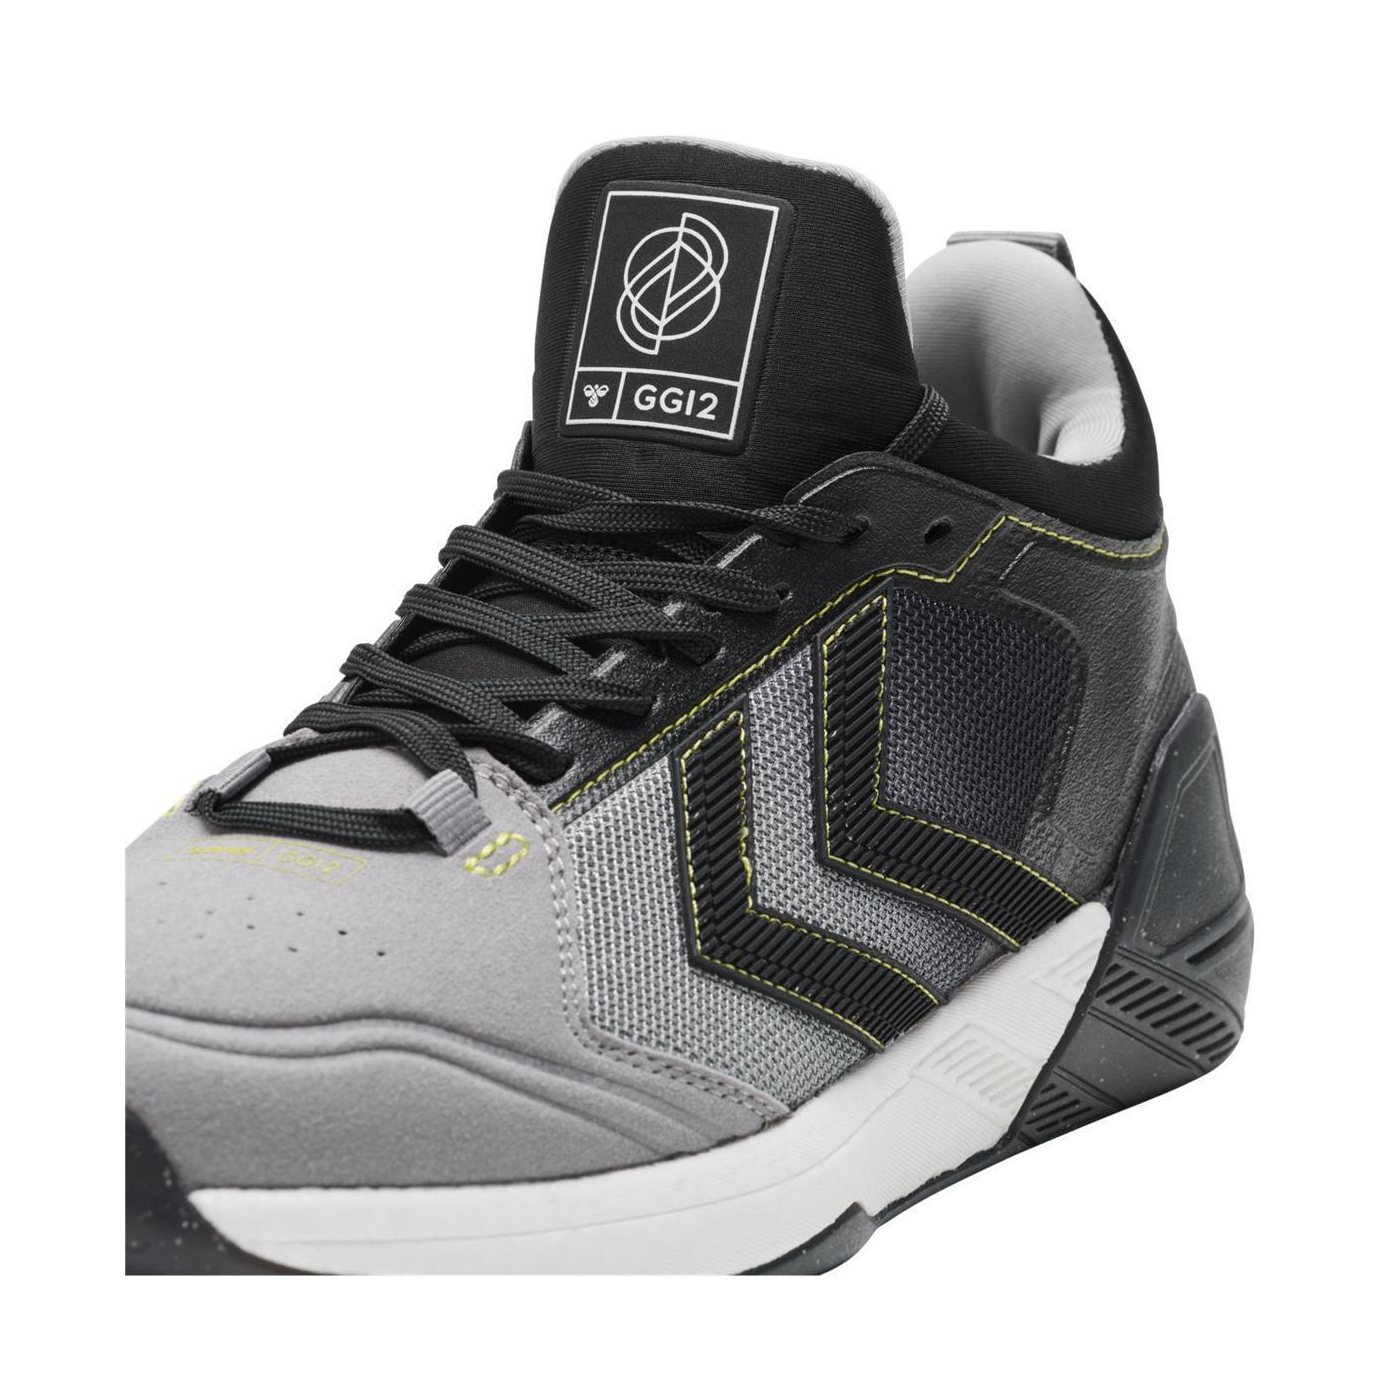 Gr hummel Algiz GG12 Indoor Handballschuhe Sneaker grau/schwarz/weiß 212129-1100 46.5 